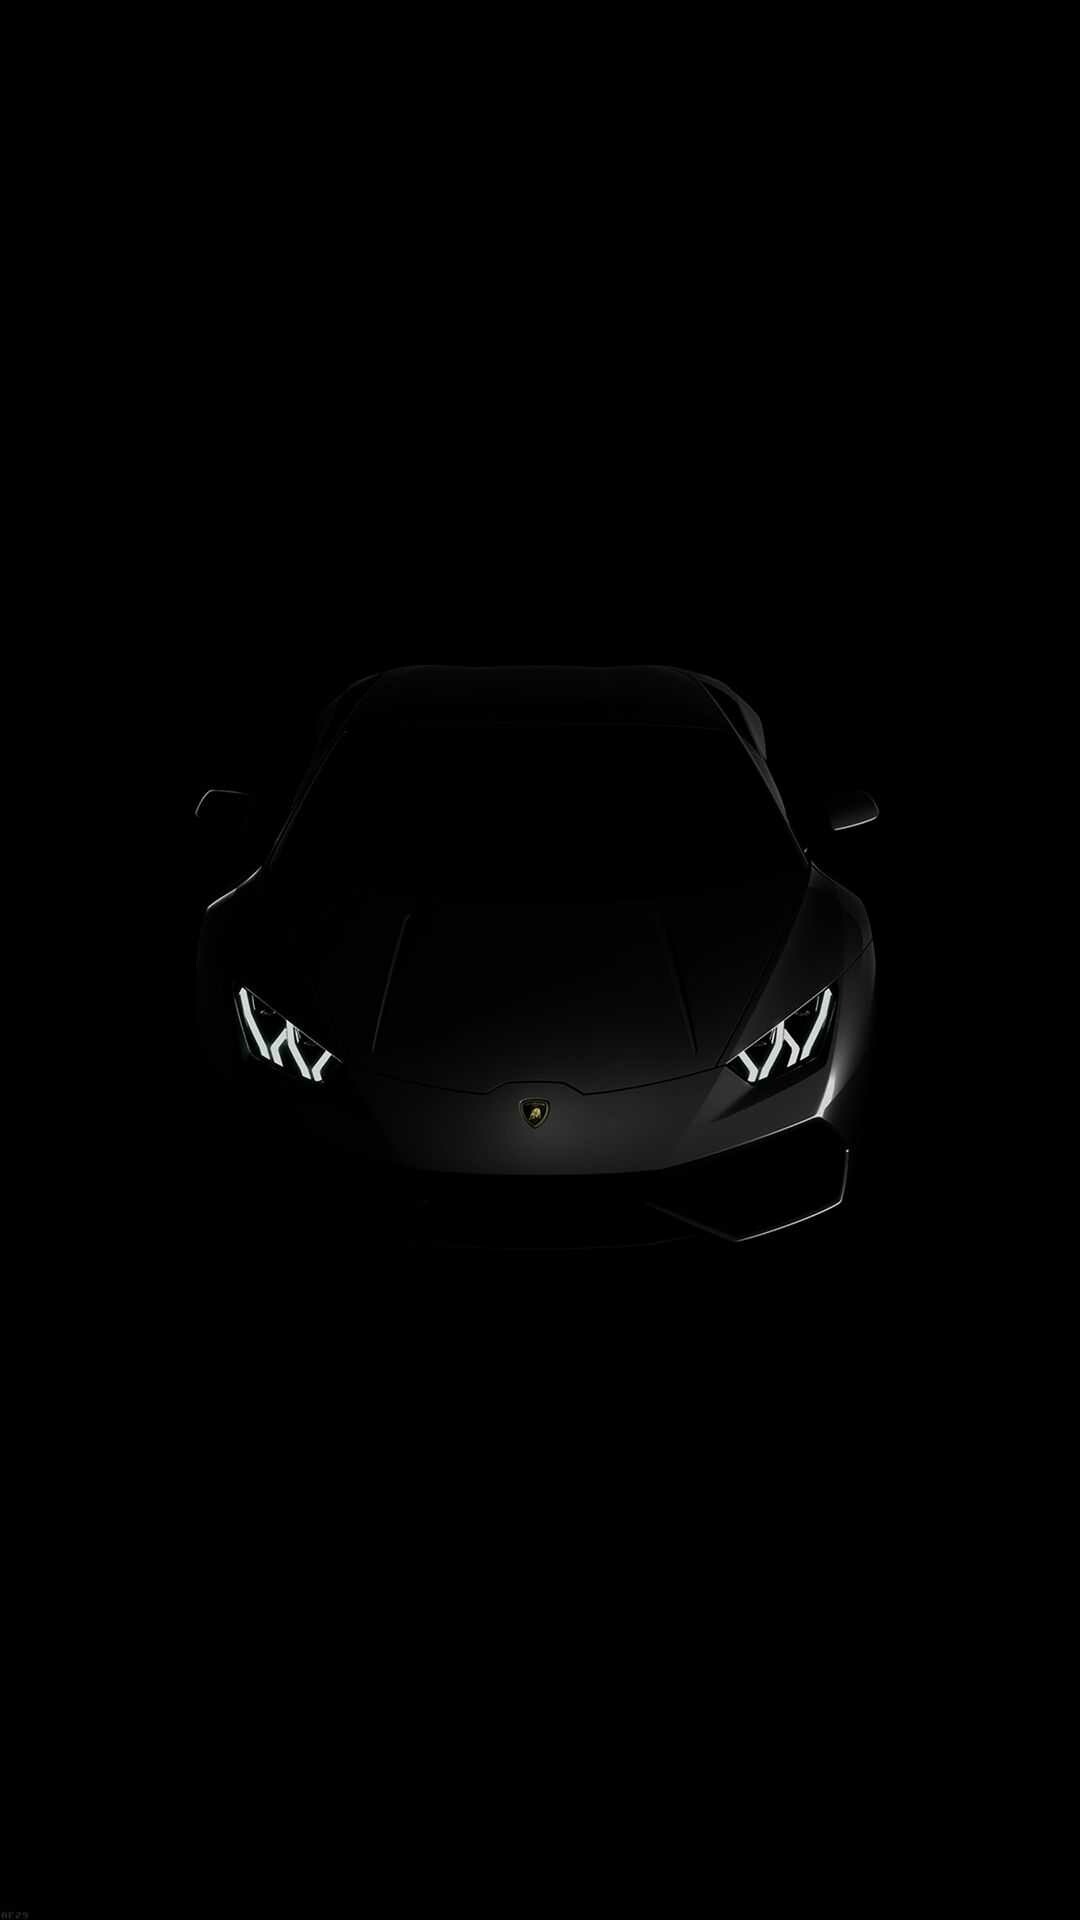 Lamborghini: Production of the Gallardo ended on 25 November 2013. 1080x1920 Full HD Wallpaper.